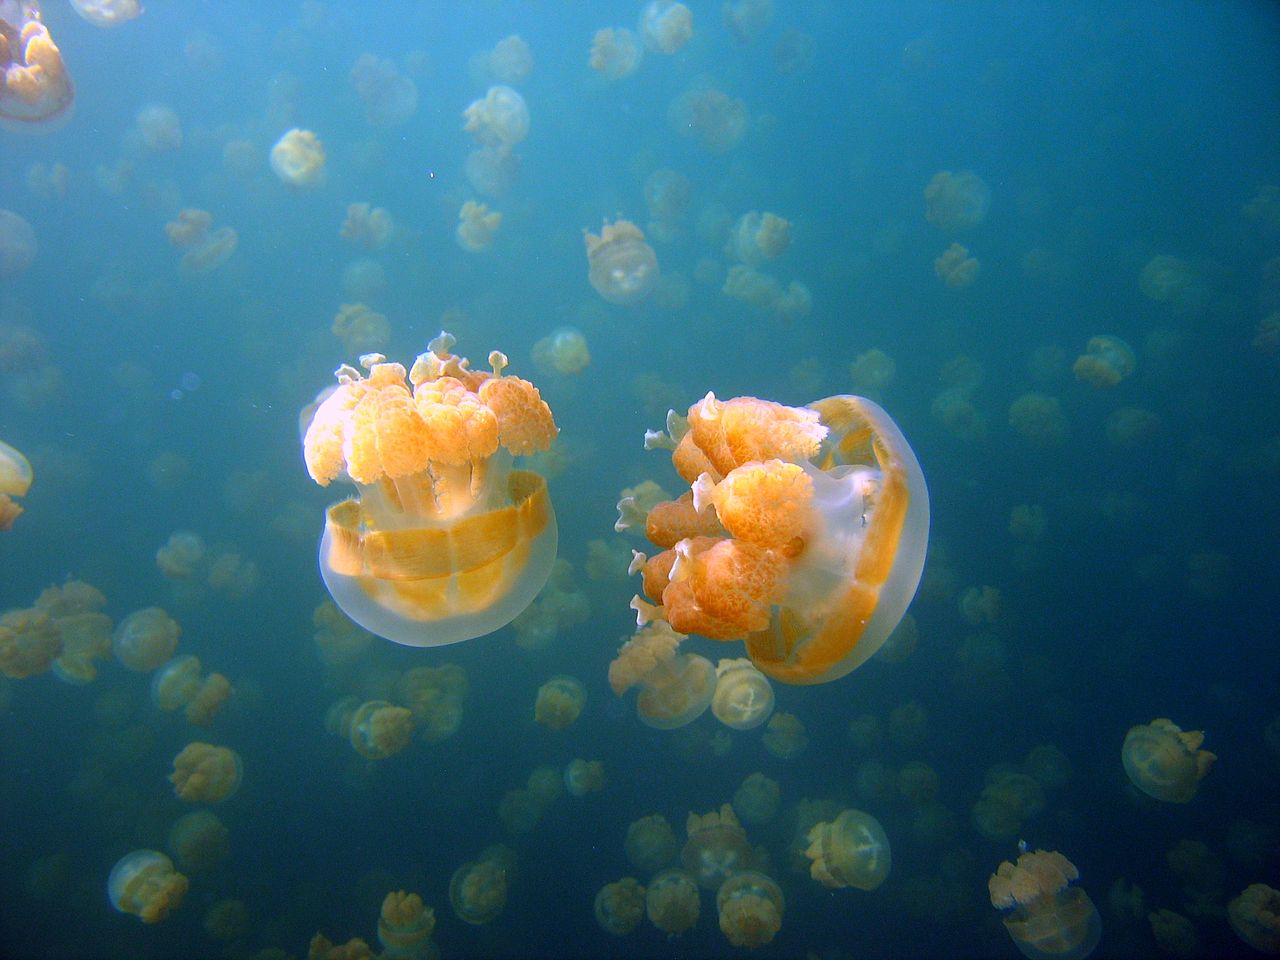 Cassiopea_jellyfish-Wikimedia-Commons-Jacopo Werther